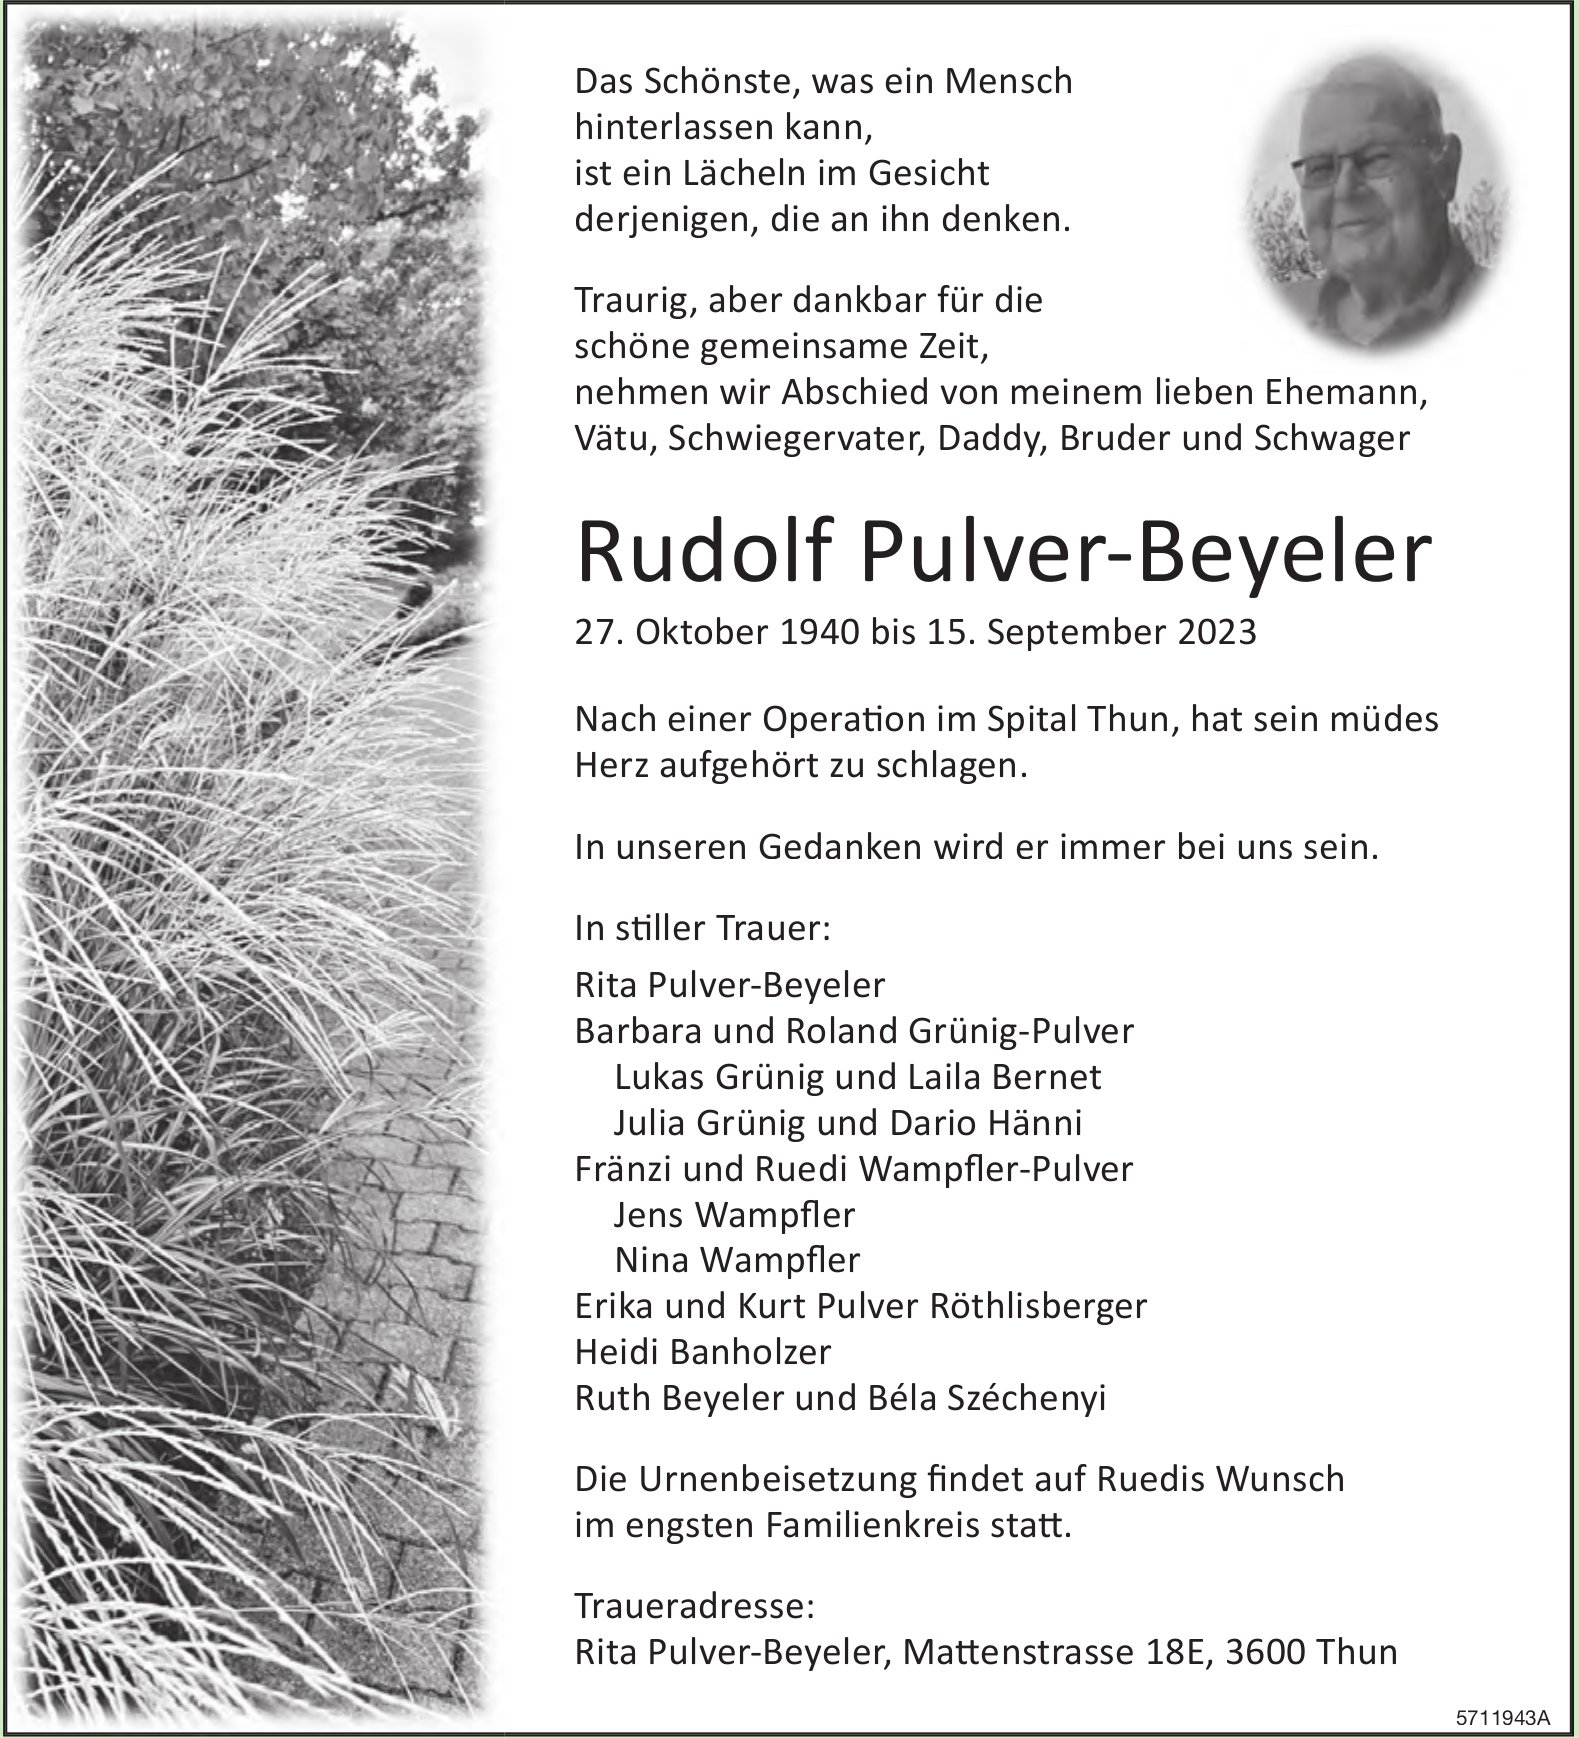 Pulver-Beyeler Rudolf, September 2023 / TA